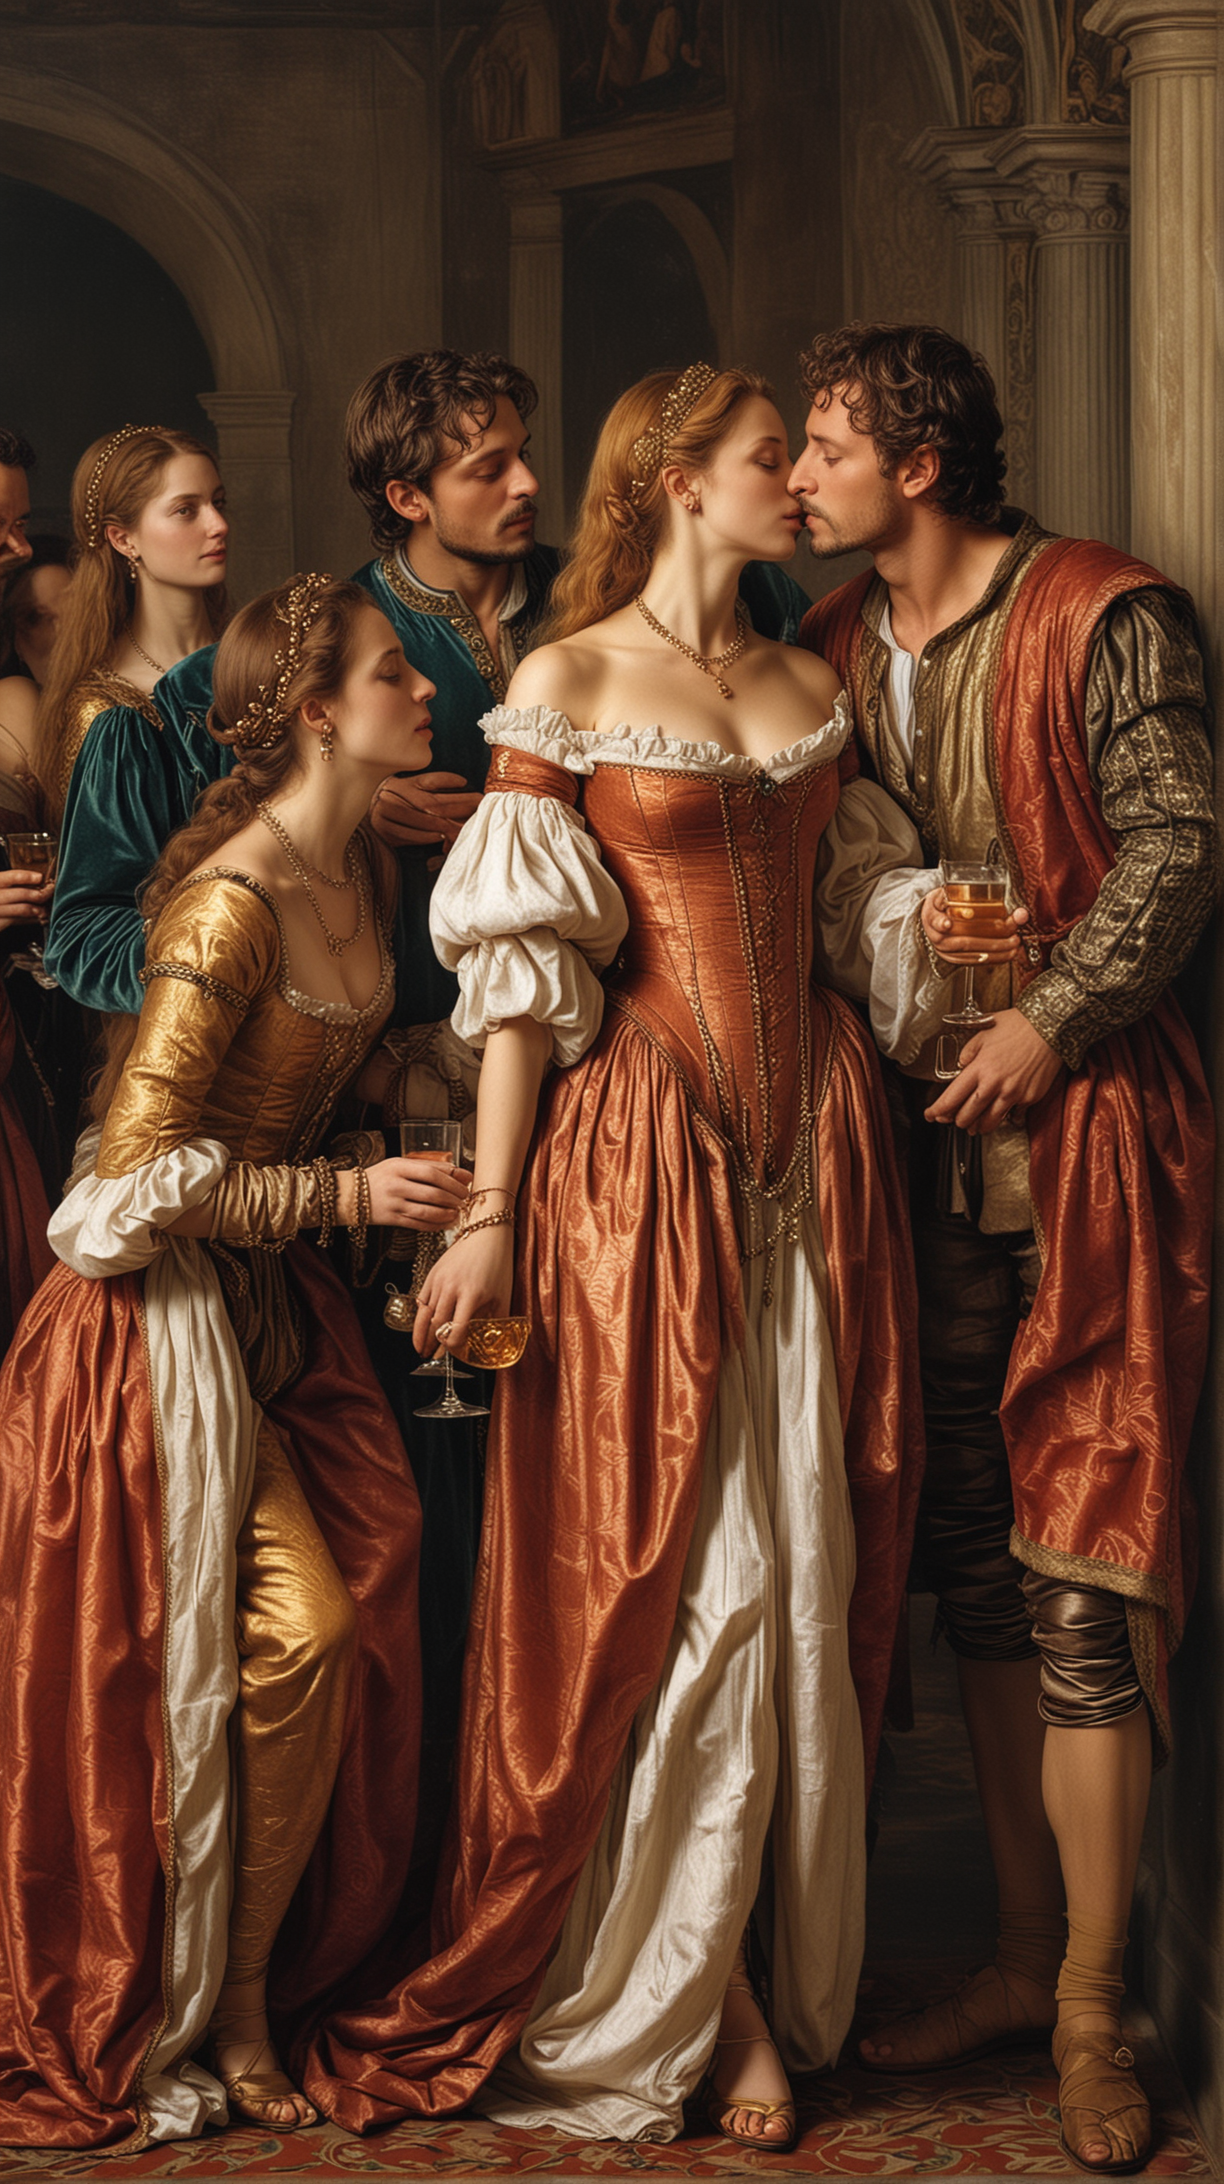 Renaissance Borgia Family Lavish Party Revelry and Romance in Opulent Attire